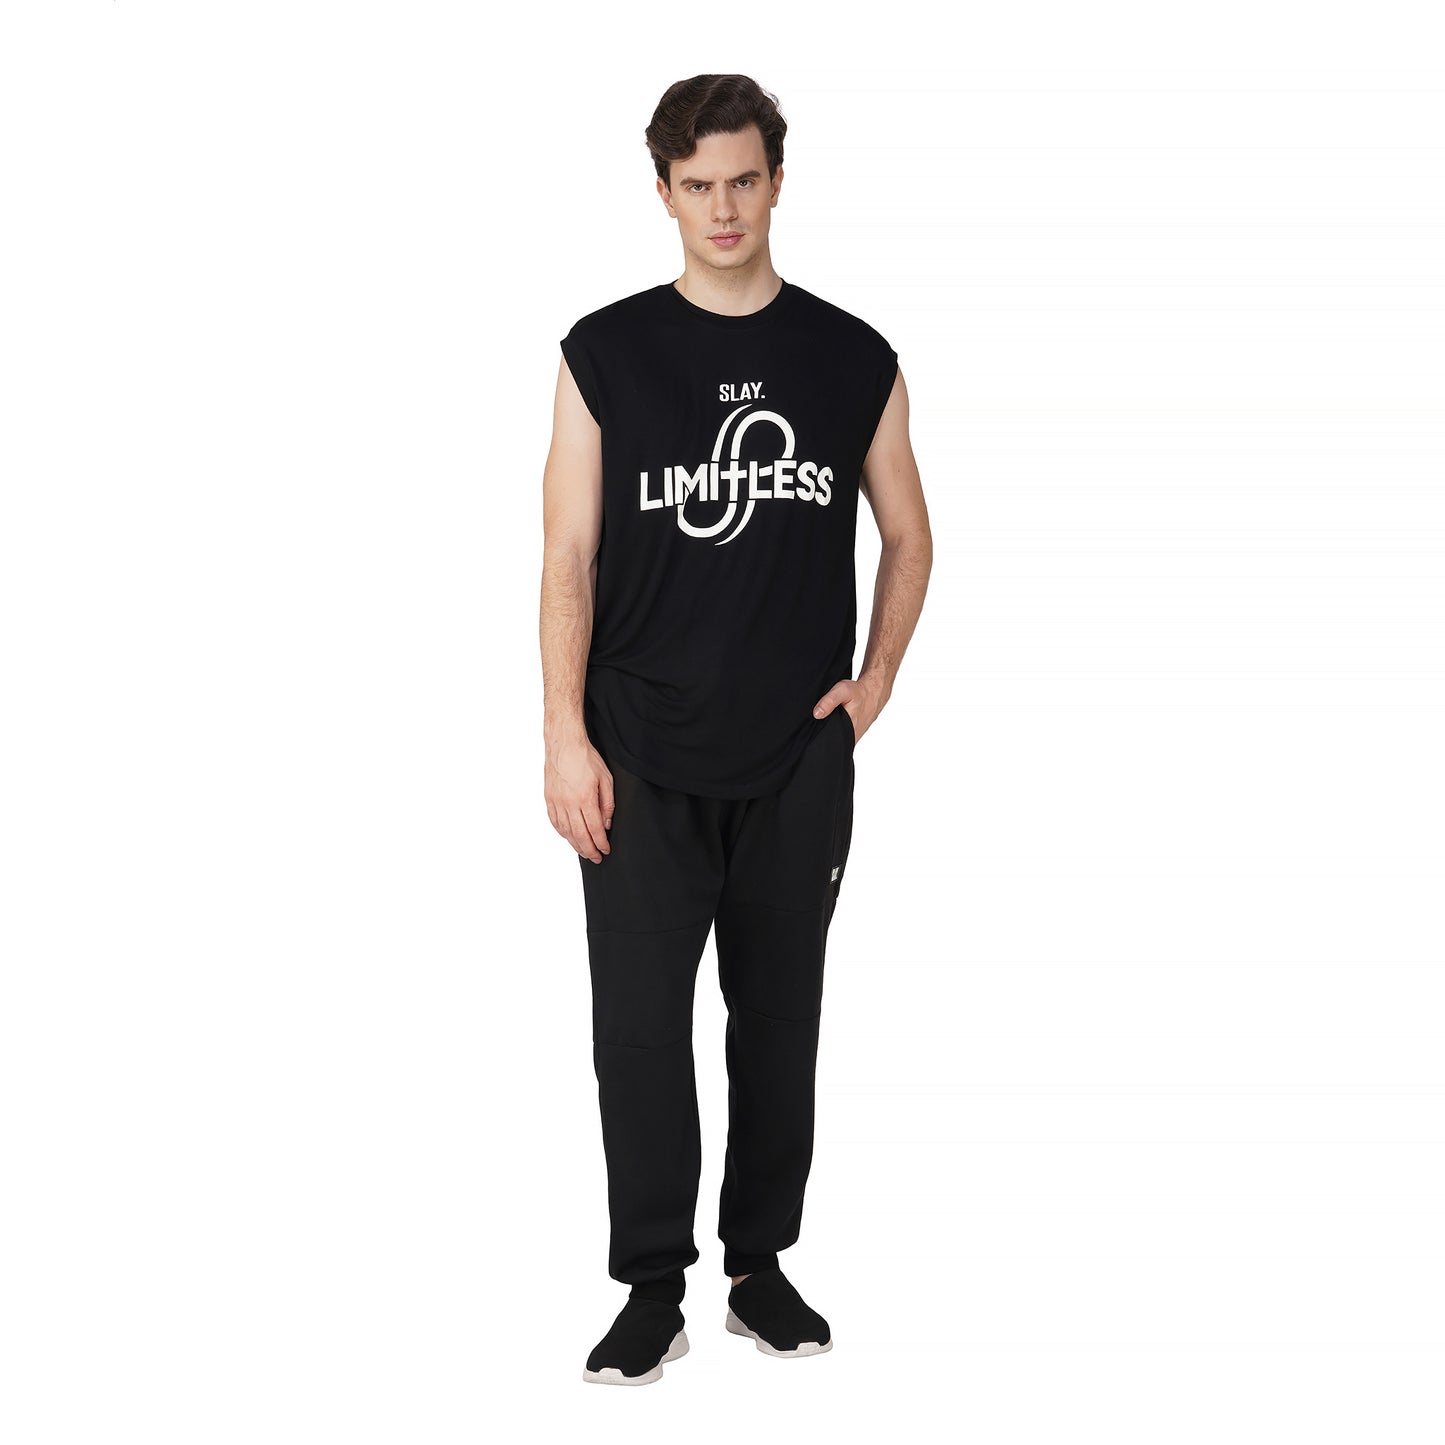 SLAY. Men's Limitless Printed Sleeveless Black Dropcut T-Shirt